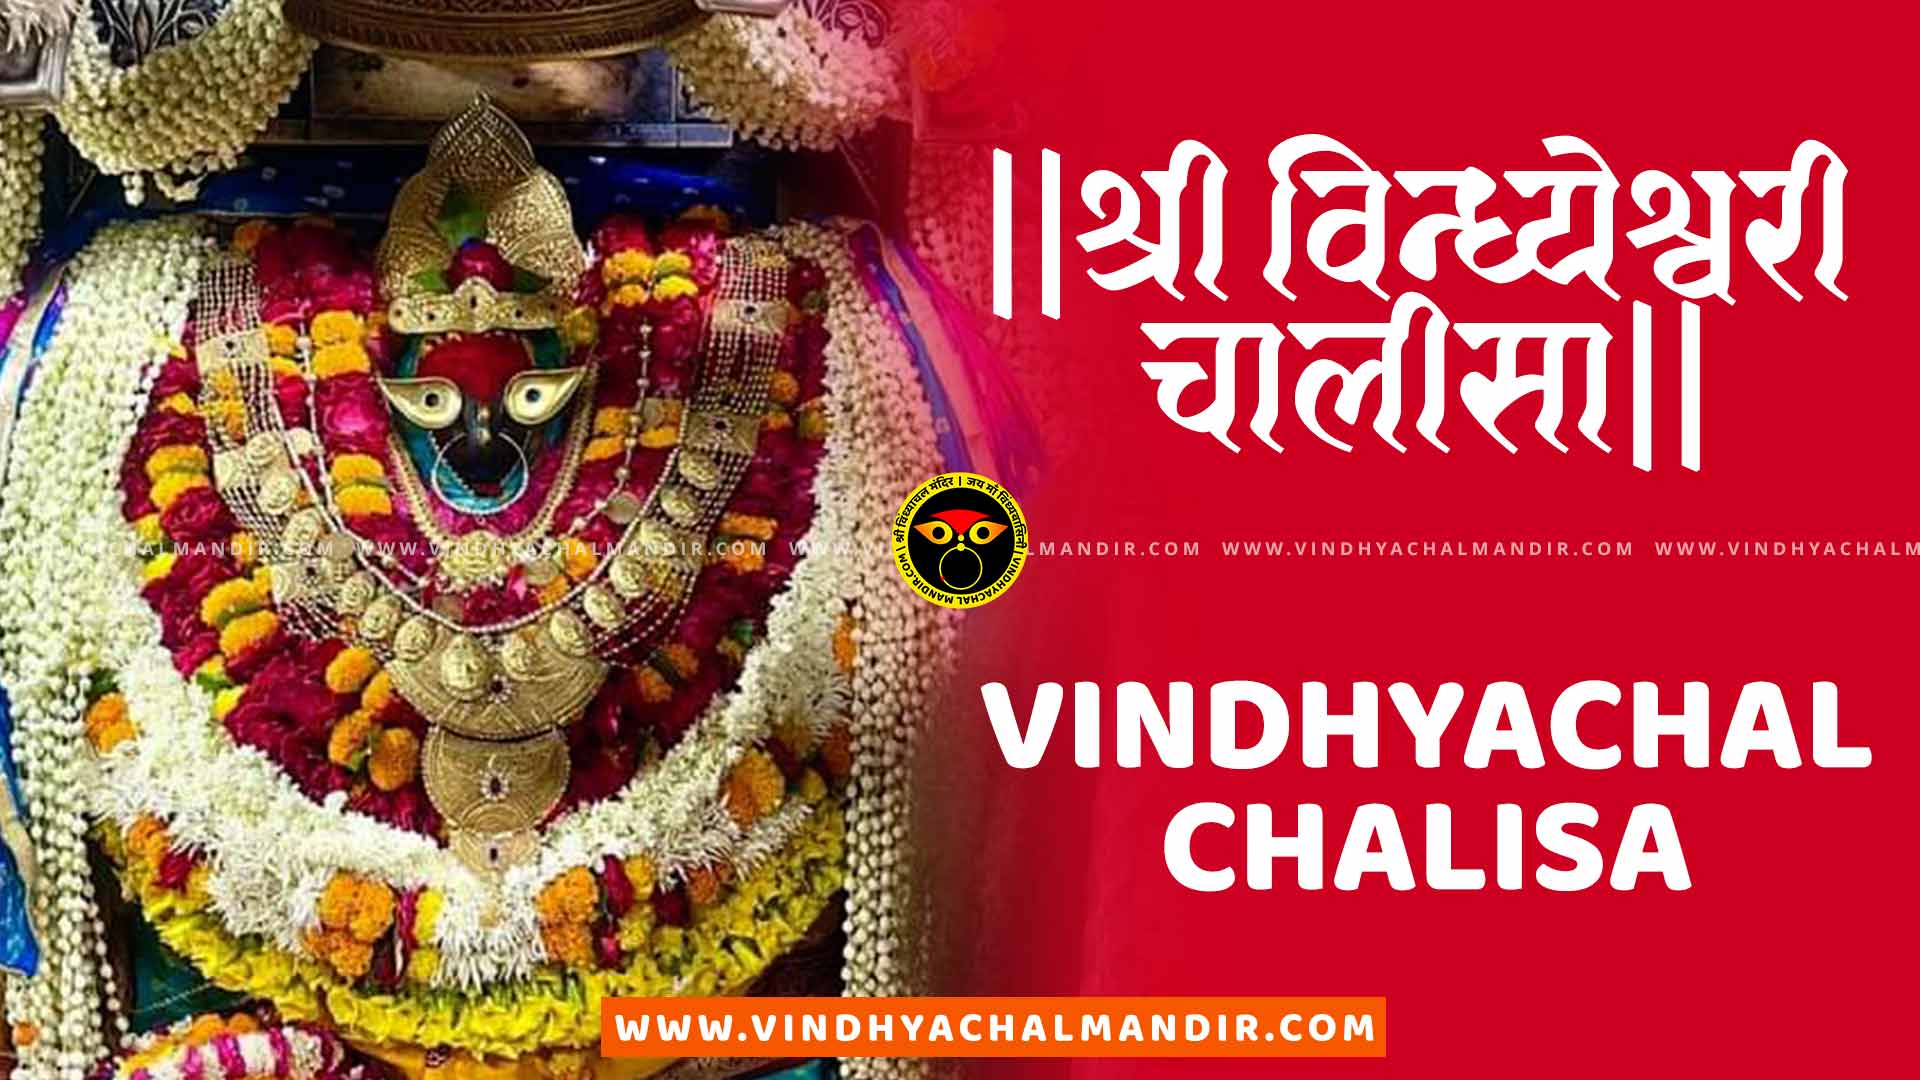 Vindhyachal Chalisa